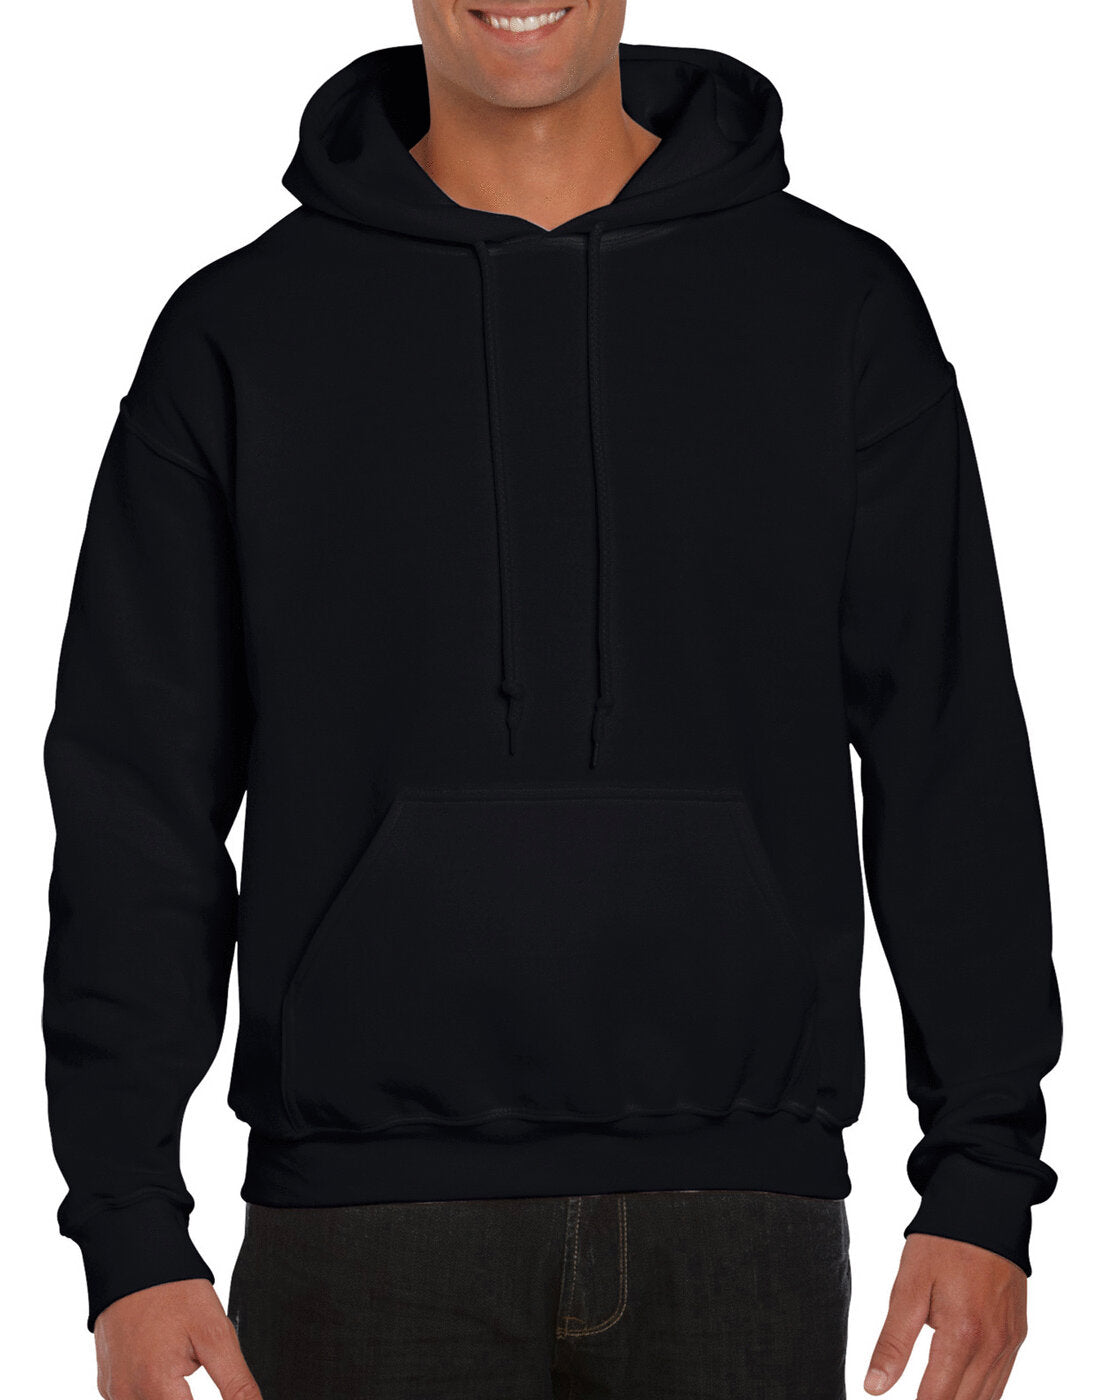 Gildan Dryblend Adult Hooded Sweatshirt - Black